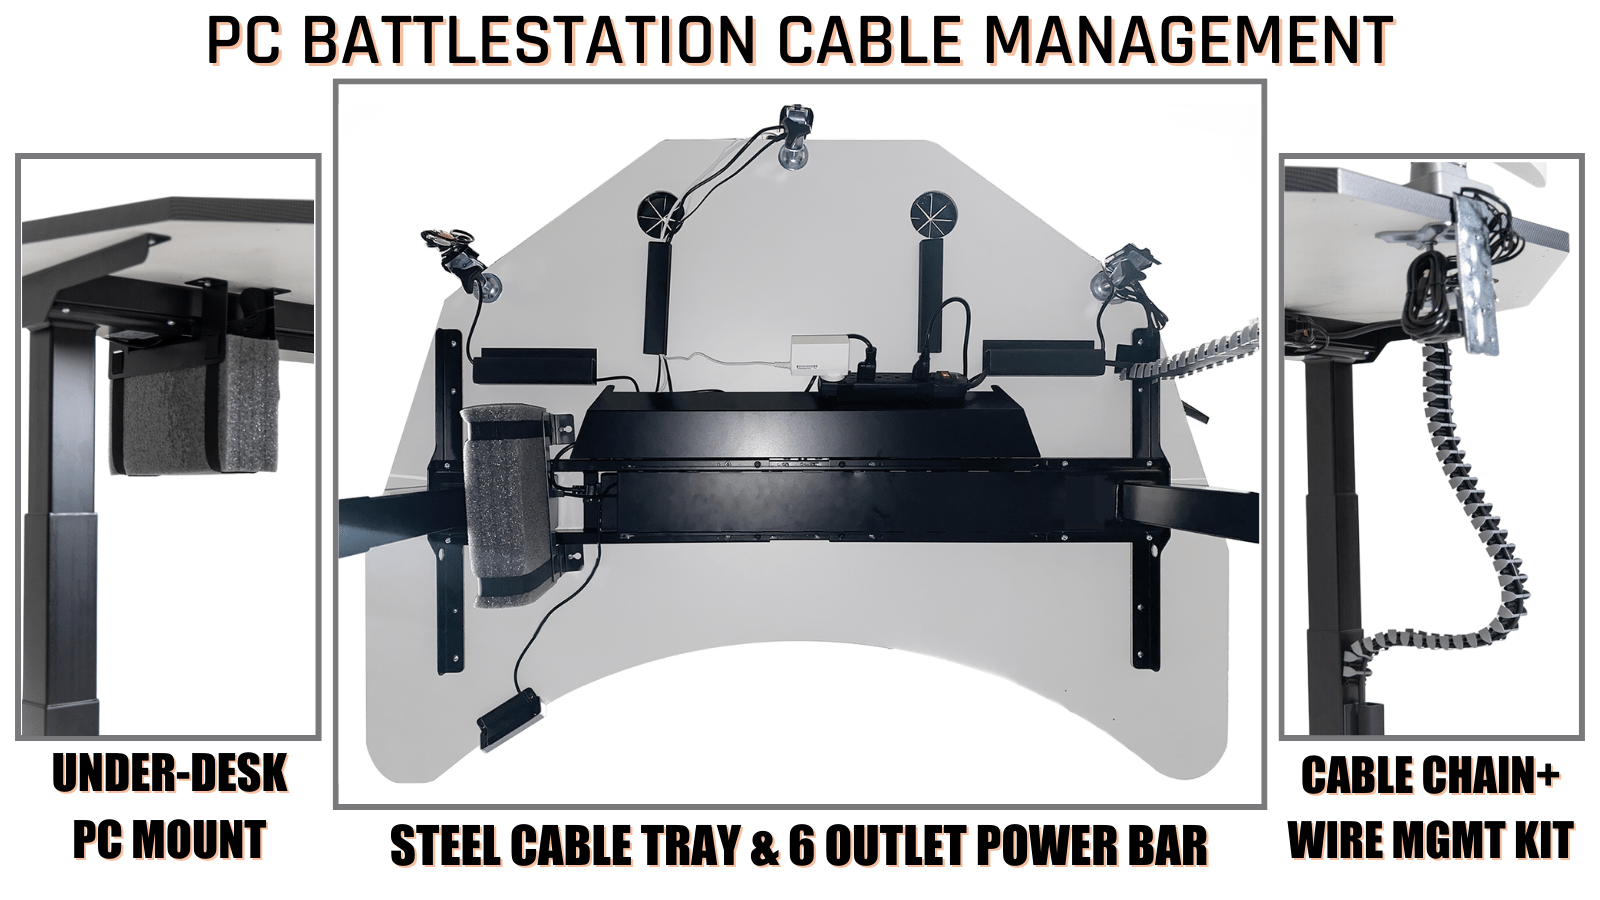 PC Battlestation Cable Management System